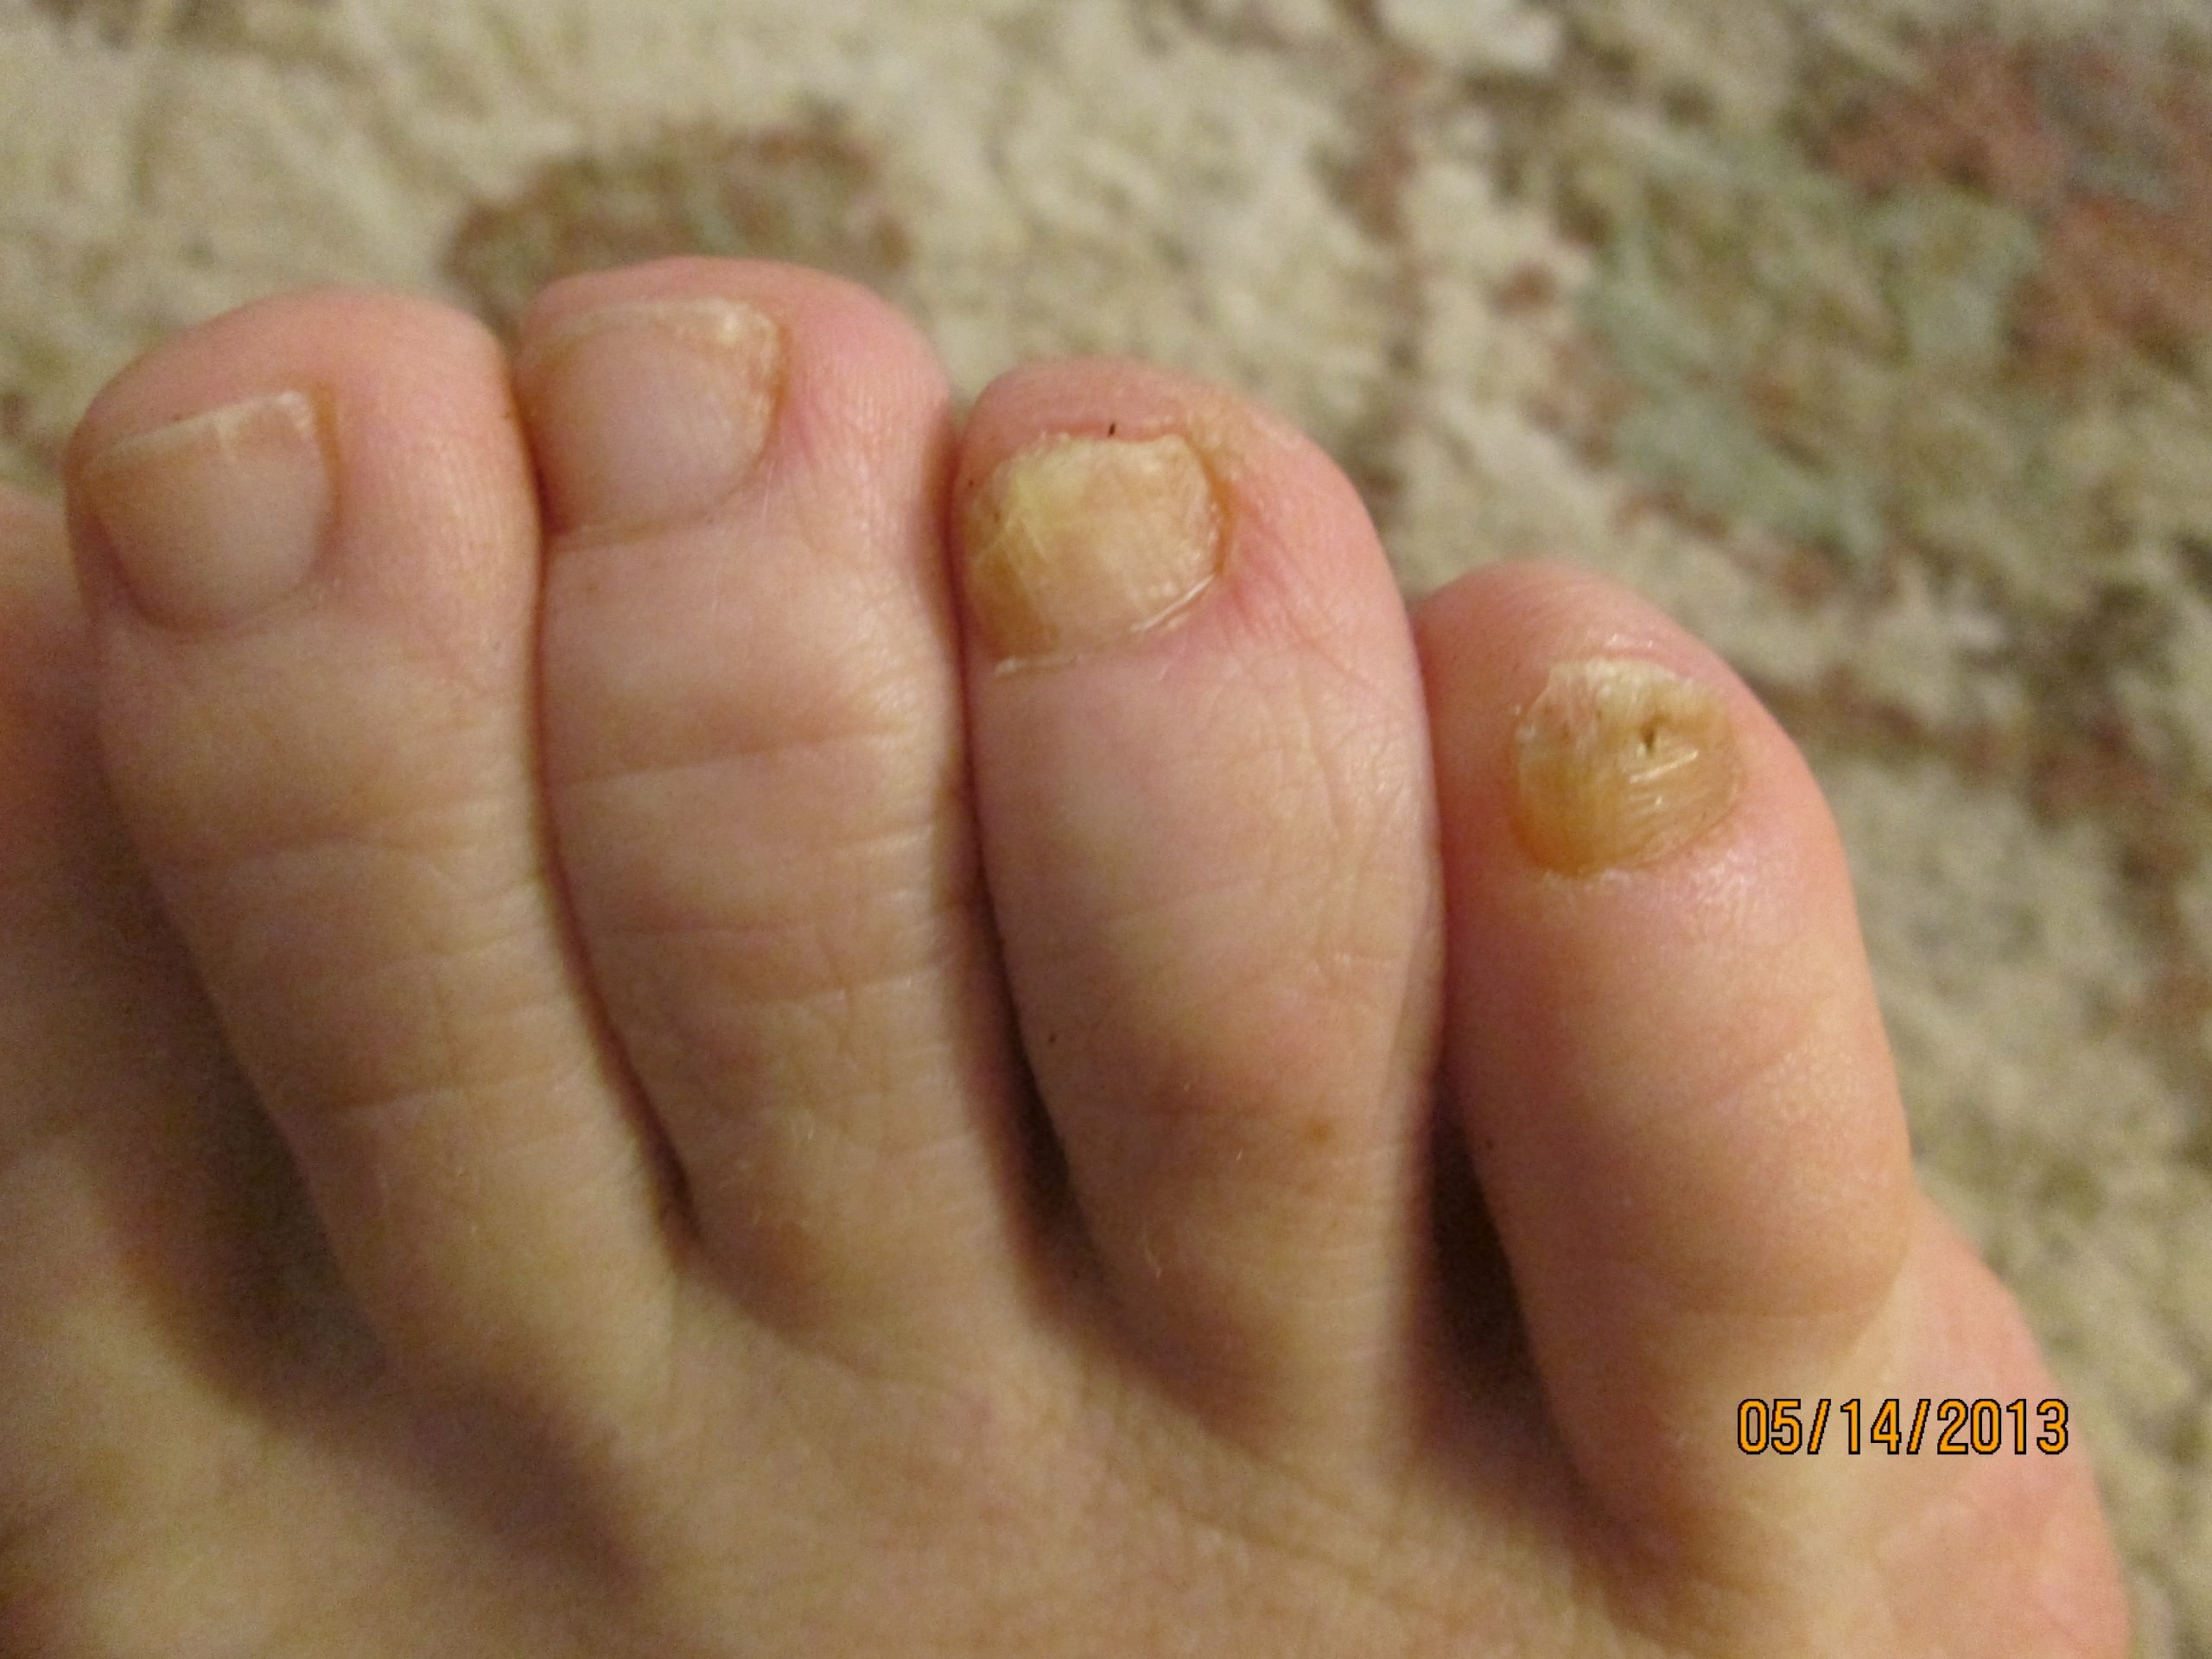 Images of toenail fungus